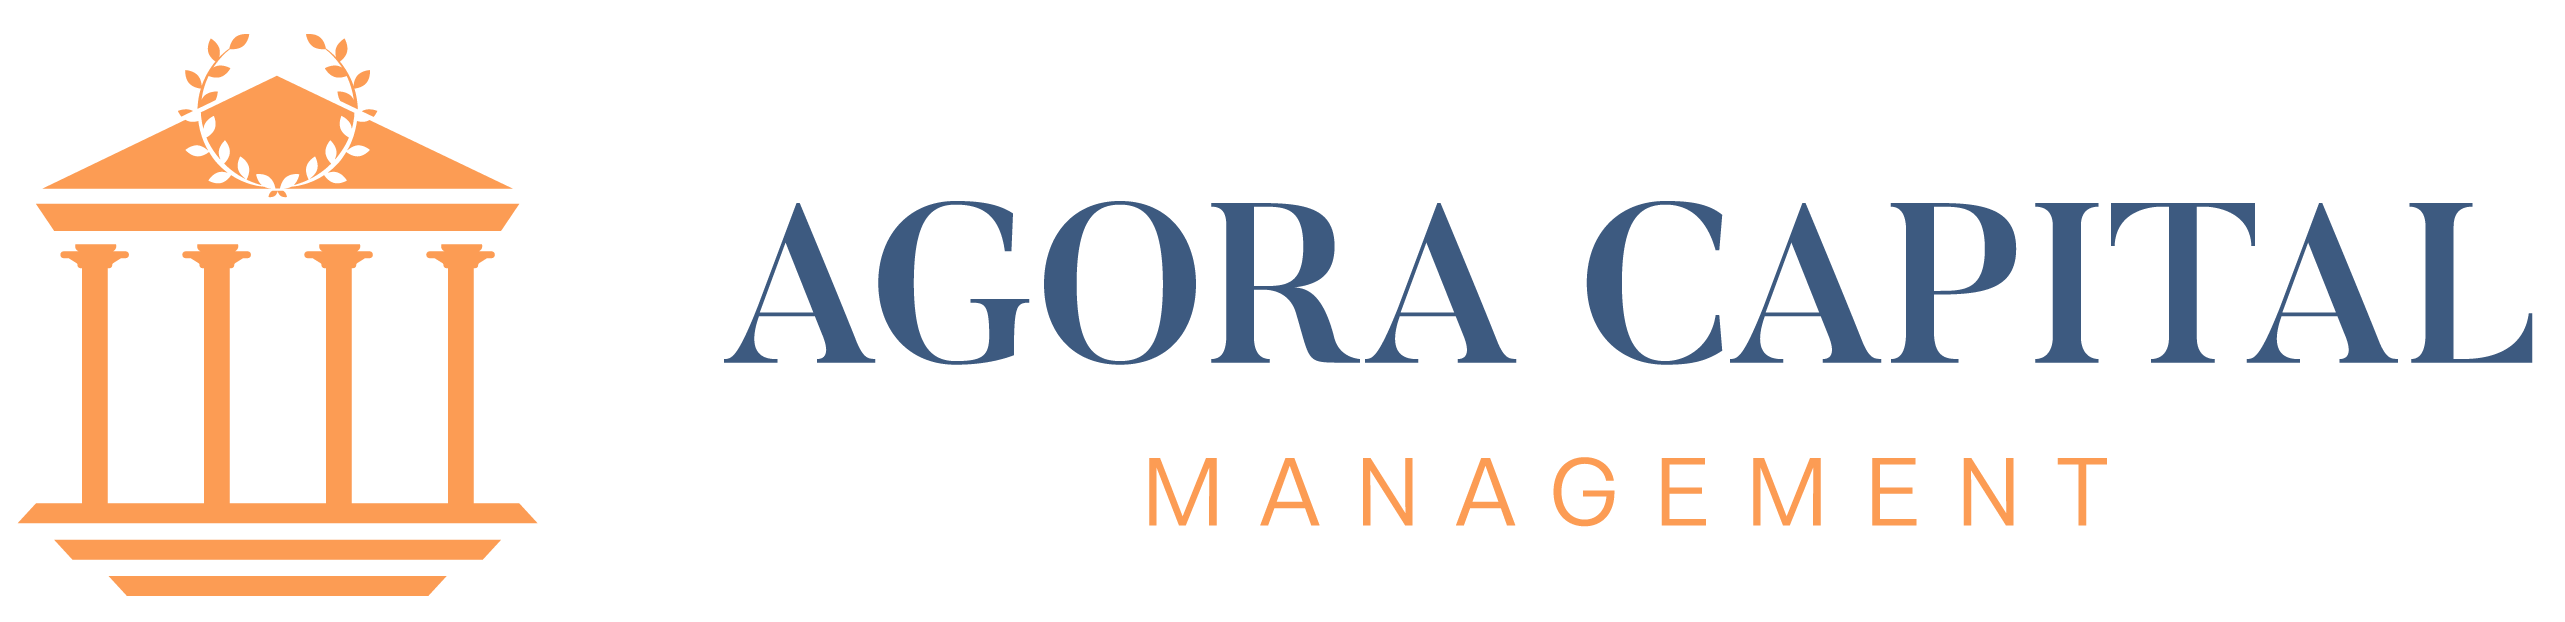 Agora Venture - Business accelerator - We help you create your future